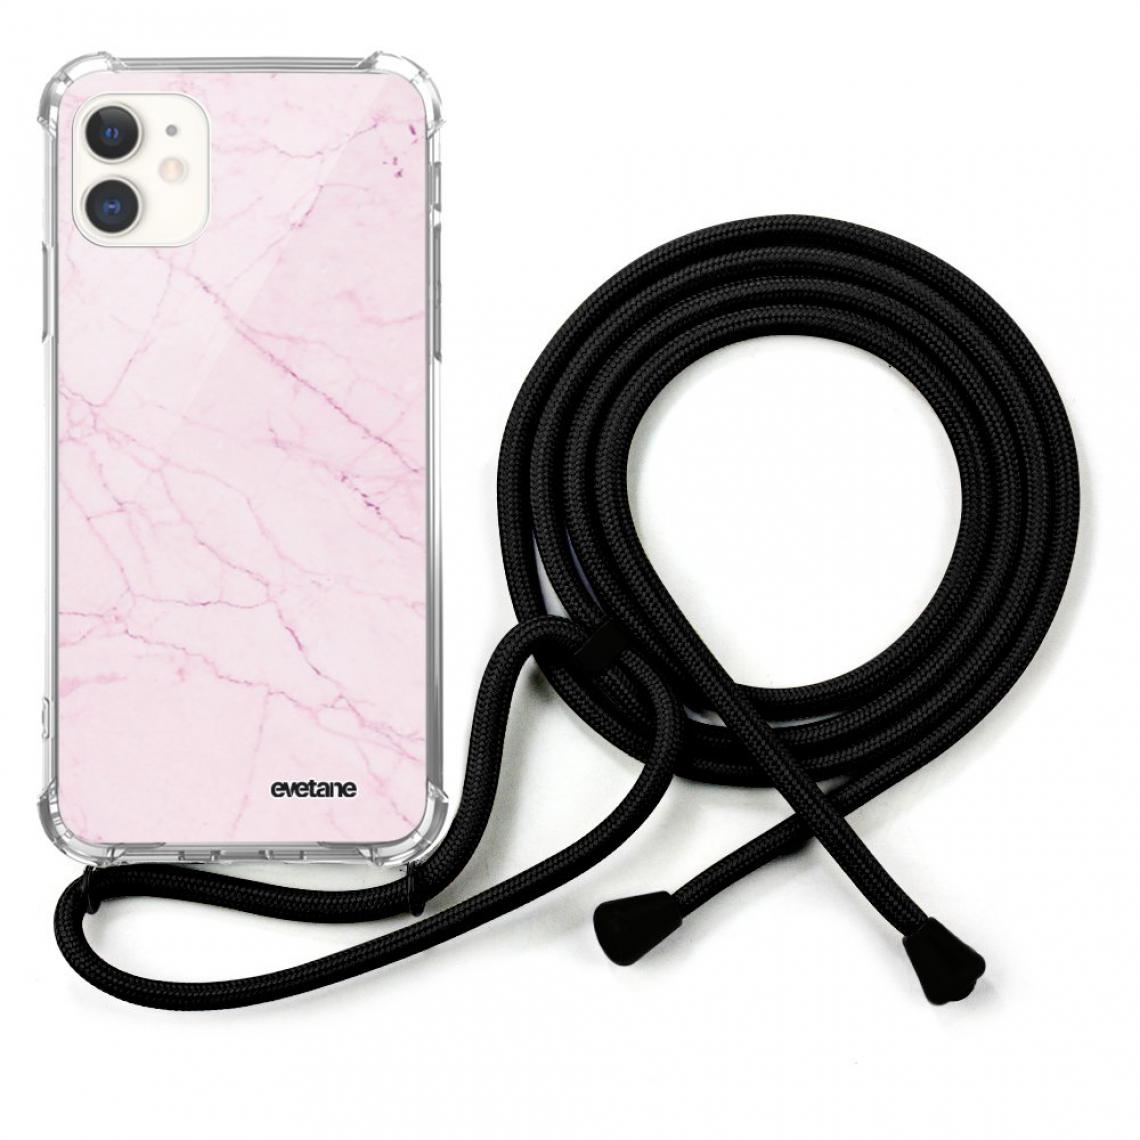 Evetane - Coque iPhone 12 Mini coque avec cordon Marbre rose - Coque, étui smartphone